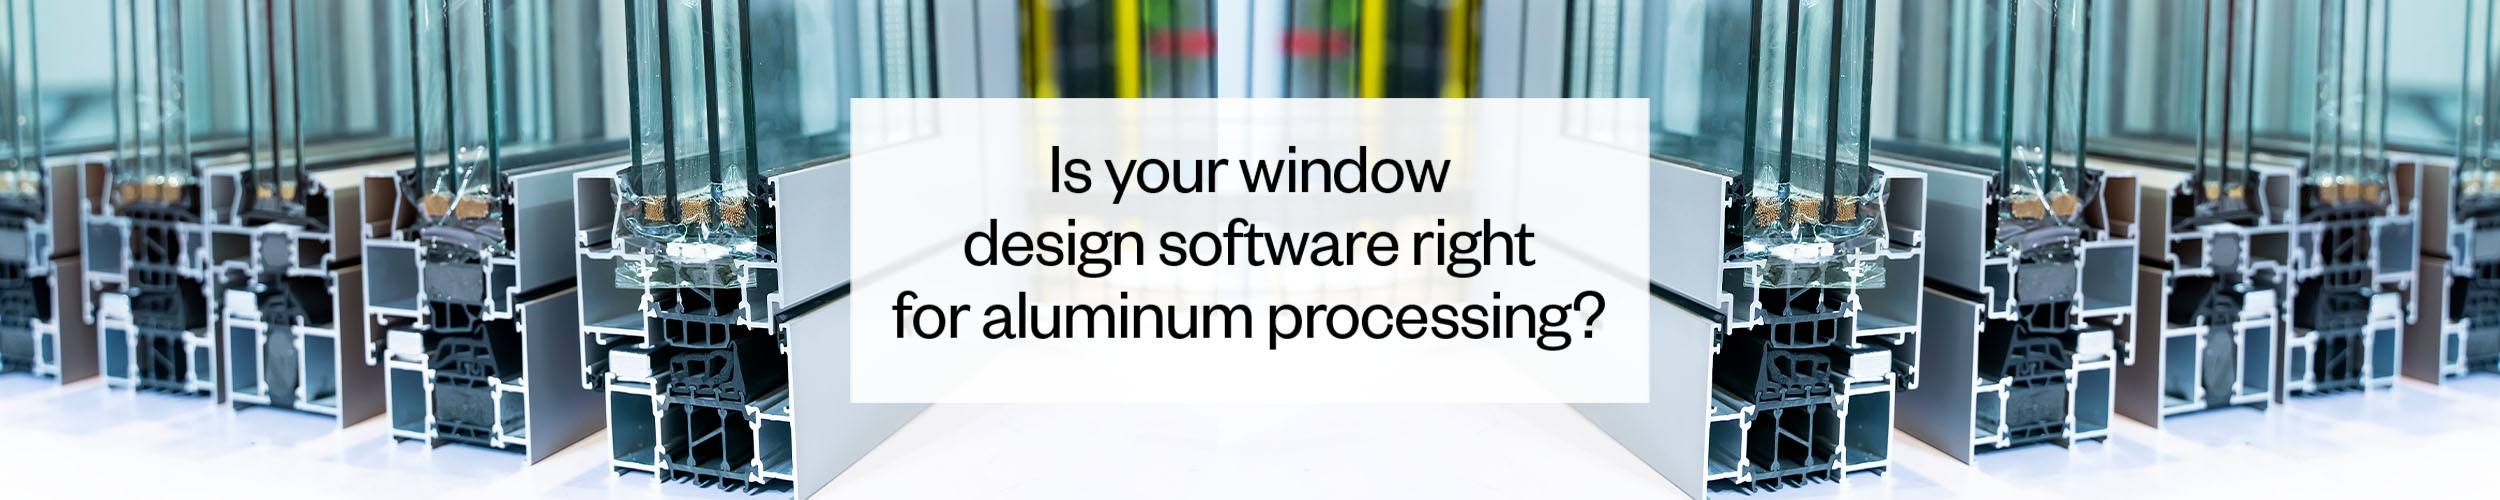 Aluminum Window Fabrication